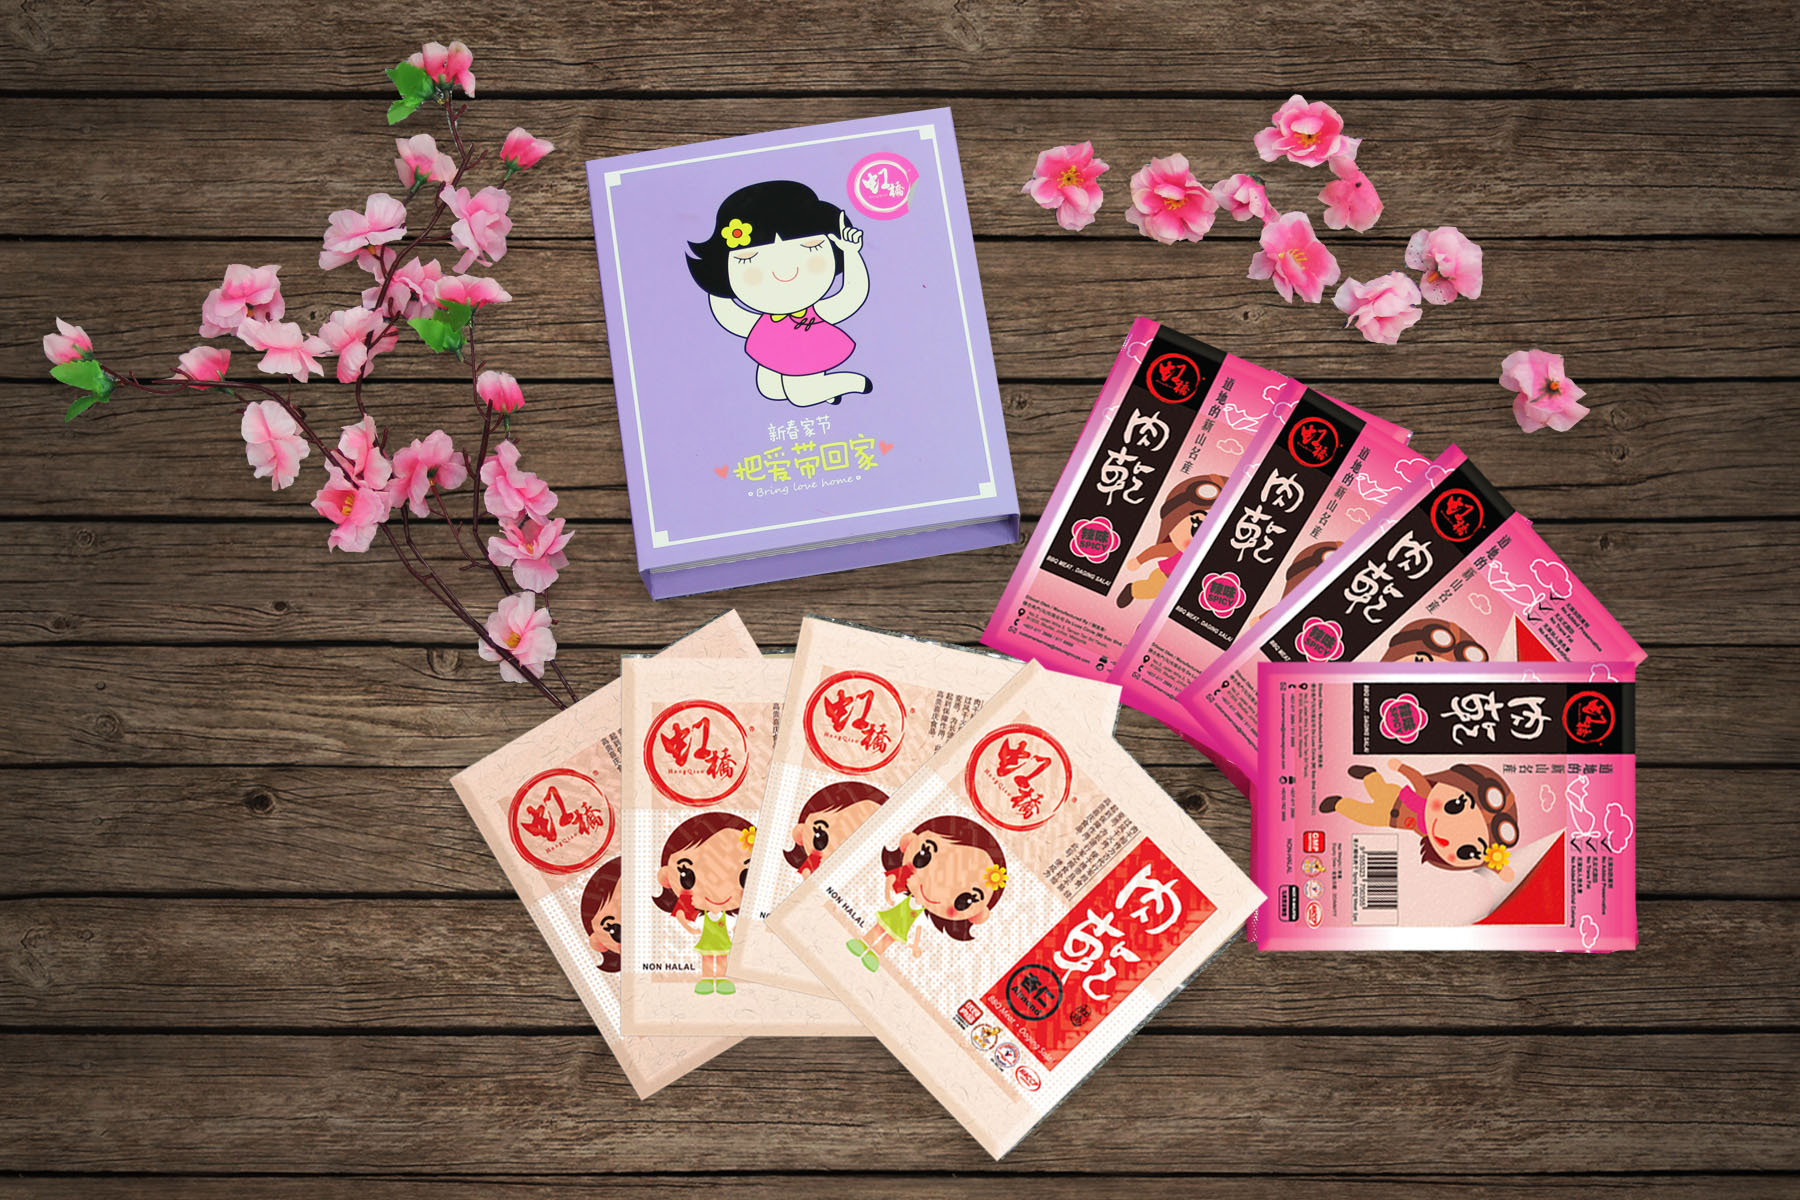 Hongqiao Rougan Gift Box: A Perfect Gift This Holiday - JOHOR NOW